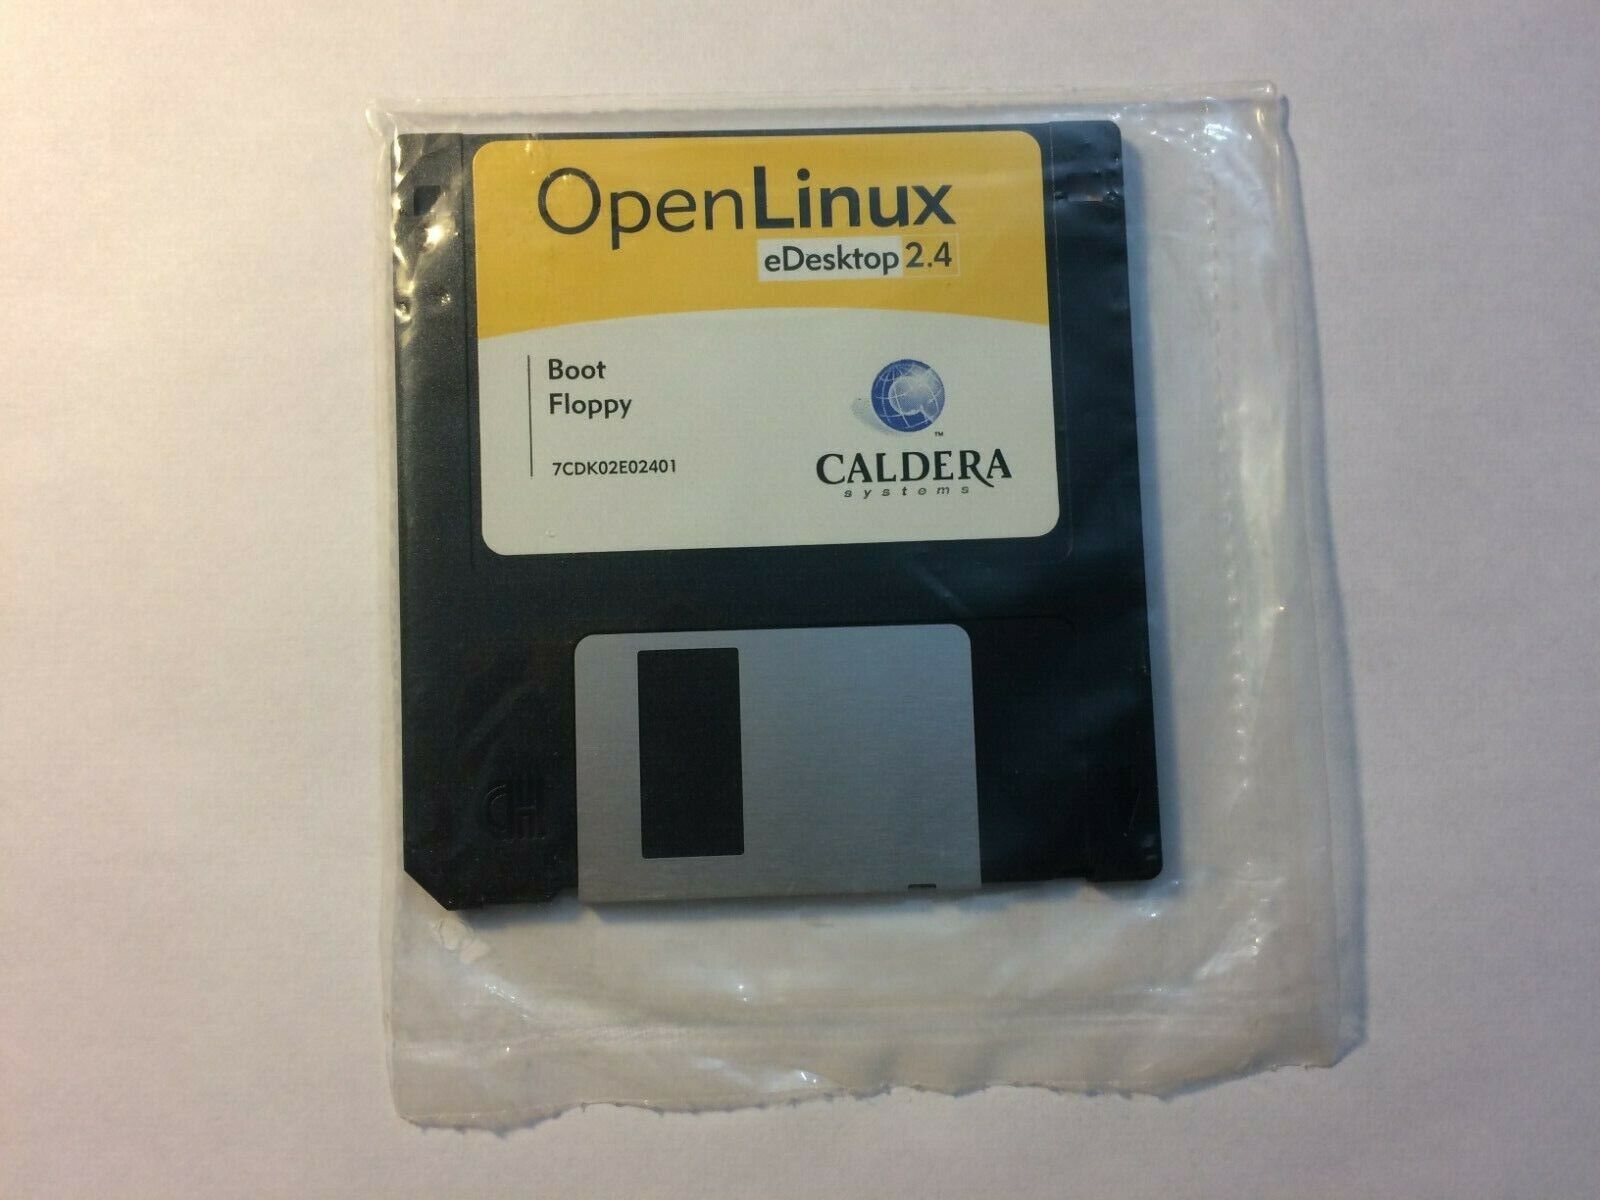 Caldera OpenLinux eDesktop 2.4 - CD ROMs (2000 edition) and Floppy Disk